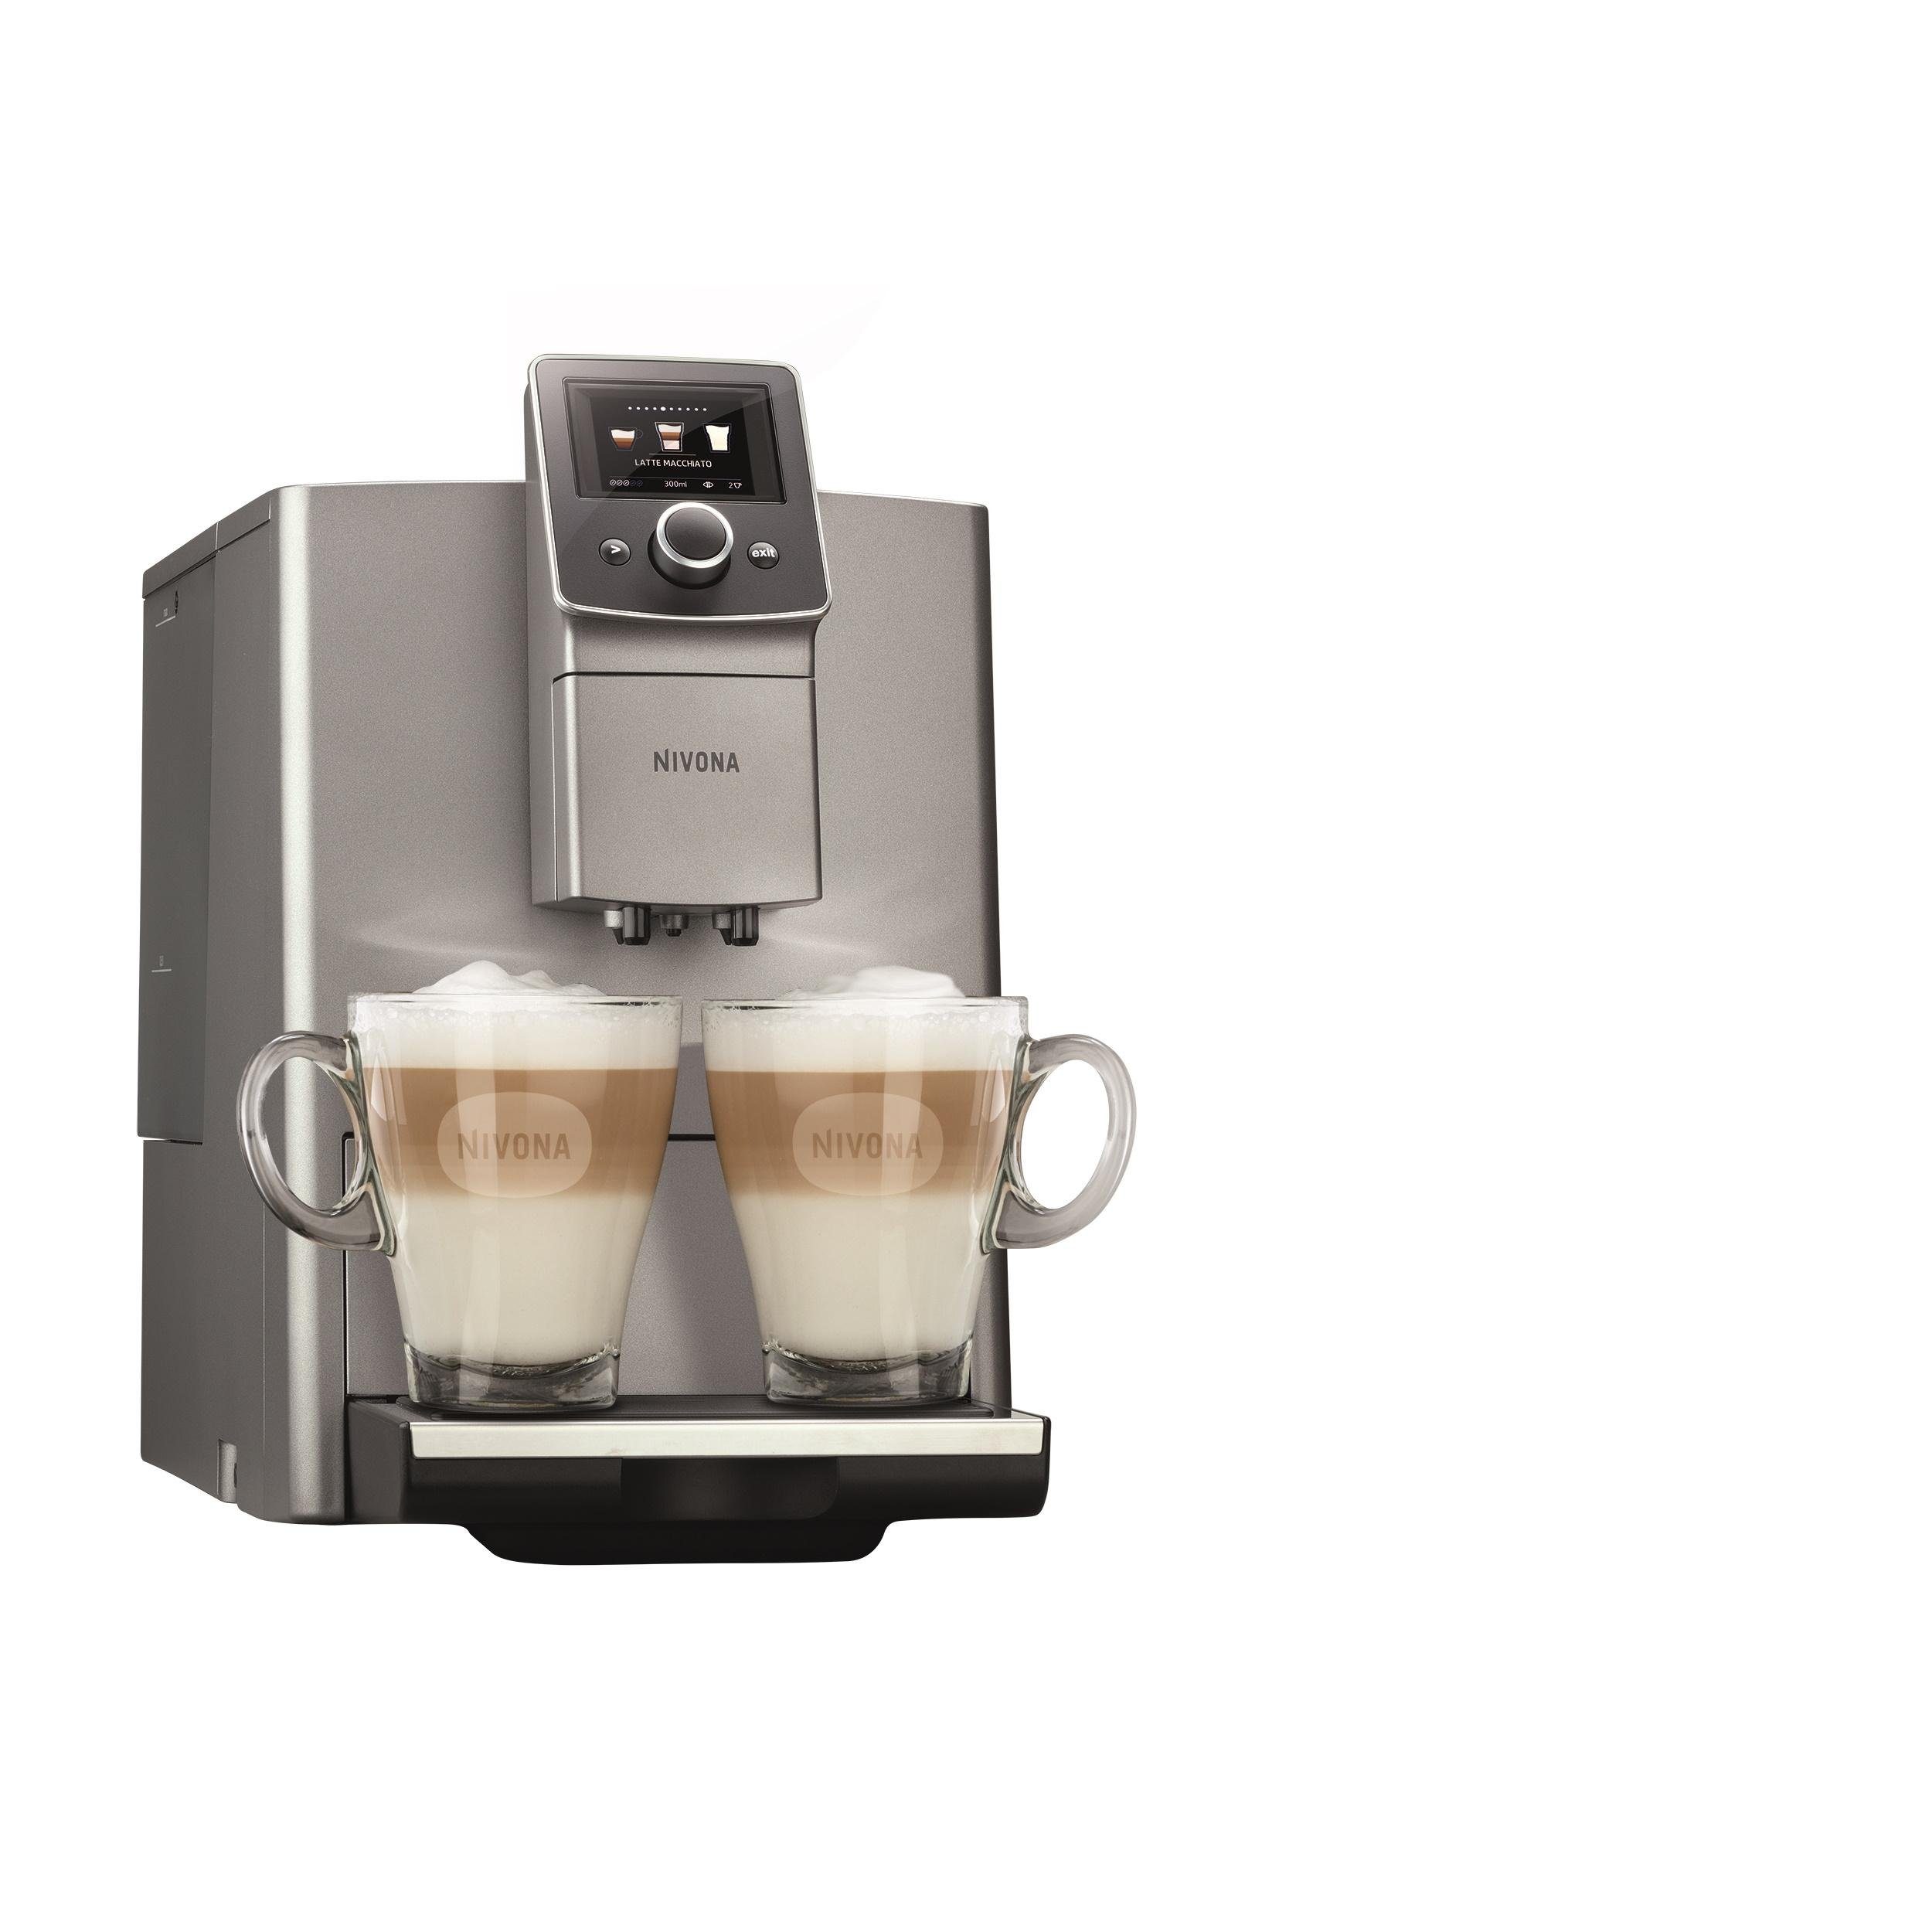 Nivona Kaffeevollautomat Wassertank 250 CafeRomatica 1,8 NICR OneTouch, g Titan, Bohnenbehälter, 823 l Kegelmahlwerk